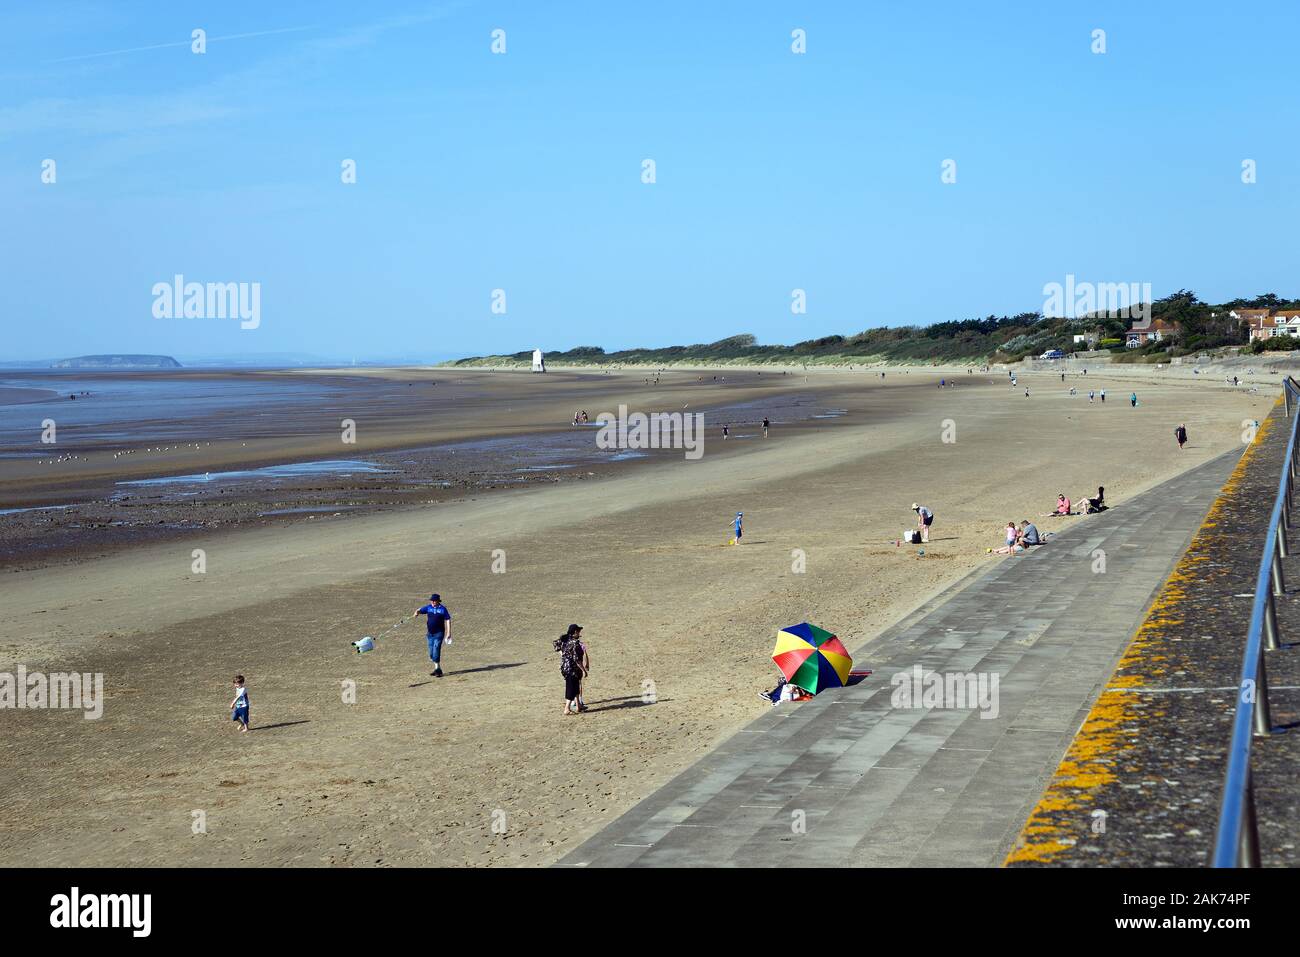 Tourists relaxing on the beach views along the coastline, Burnham-on-Sea, England, UK. Stock Photo